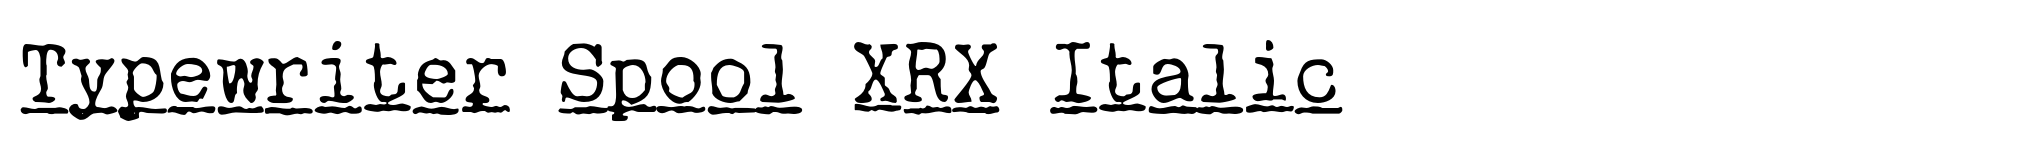 Typewriter Spool XRX Italic image